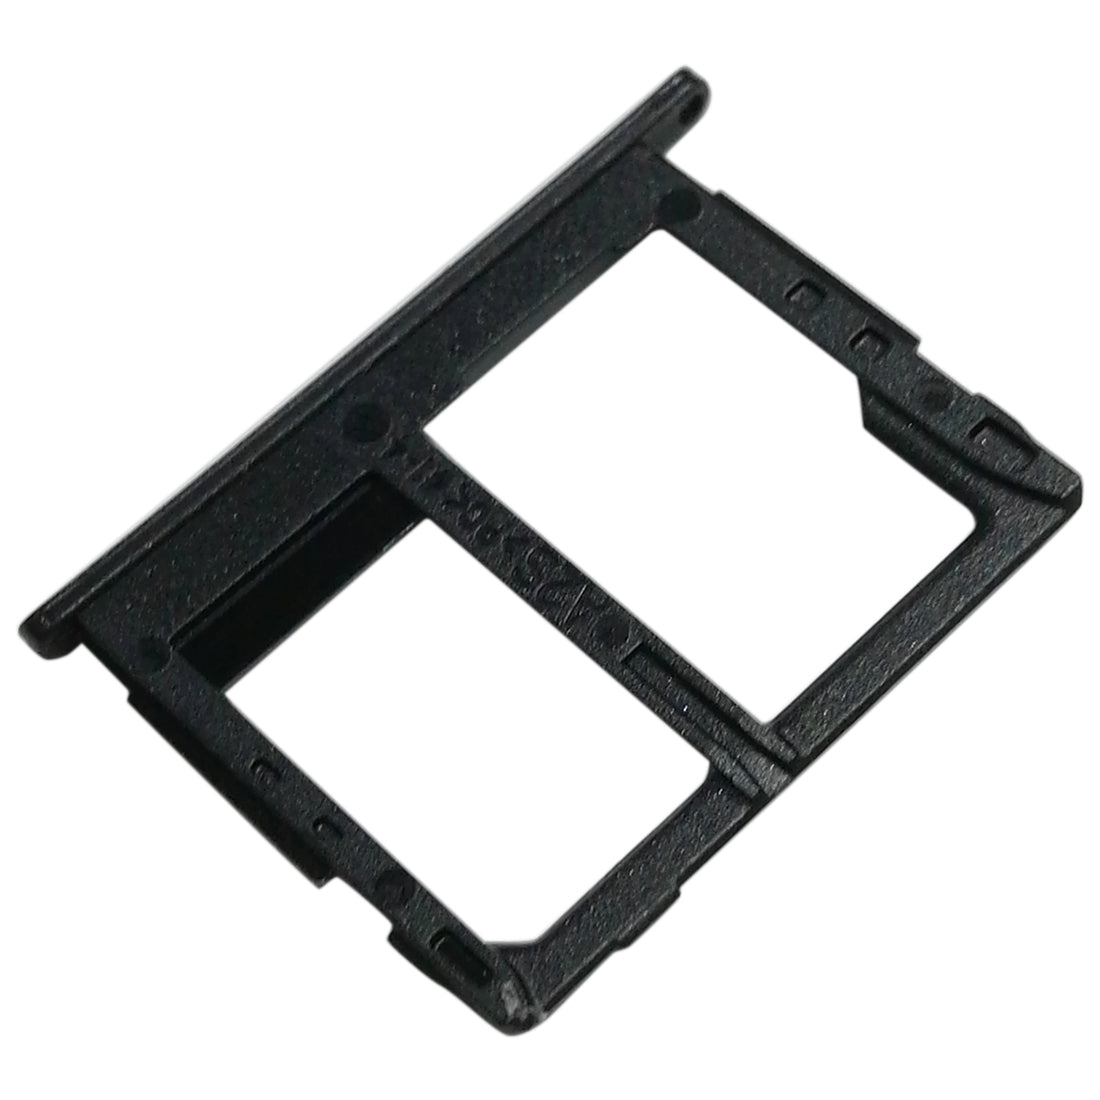 SIM / Micro SD Holder Tray Samsung Galaxy Tab A 8.0 / T380 / T385 Black